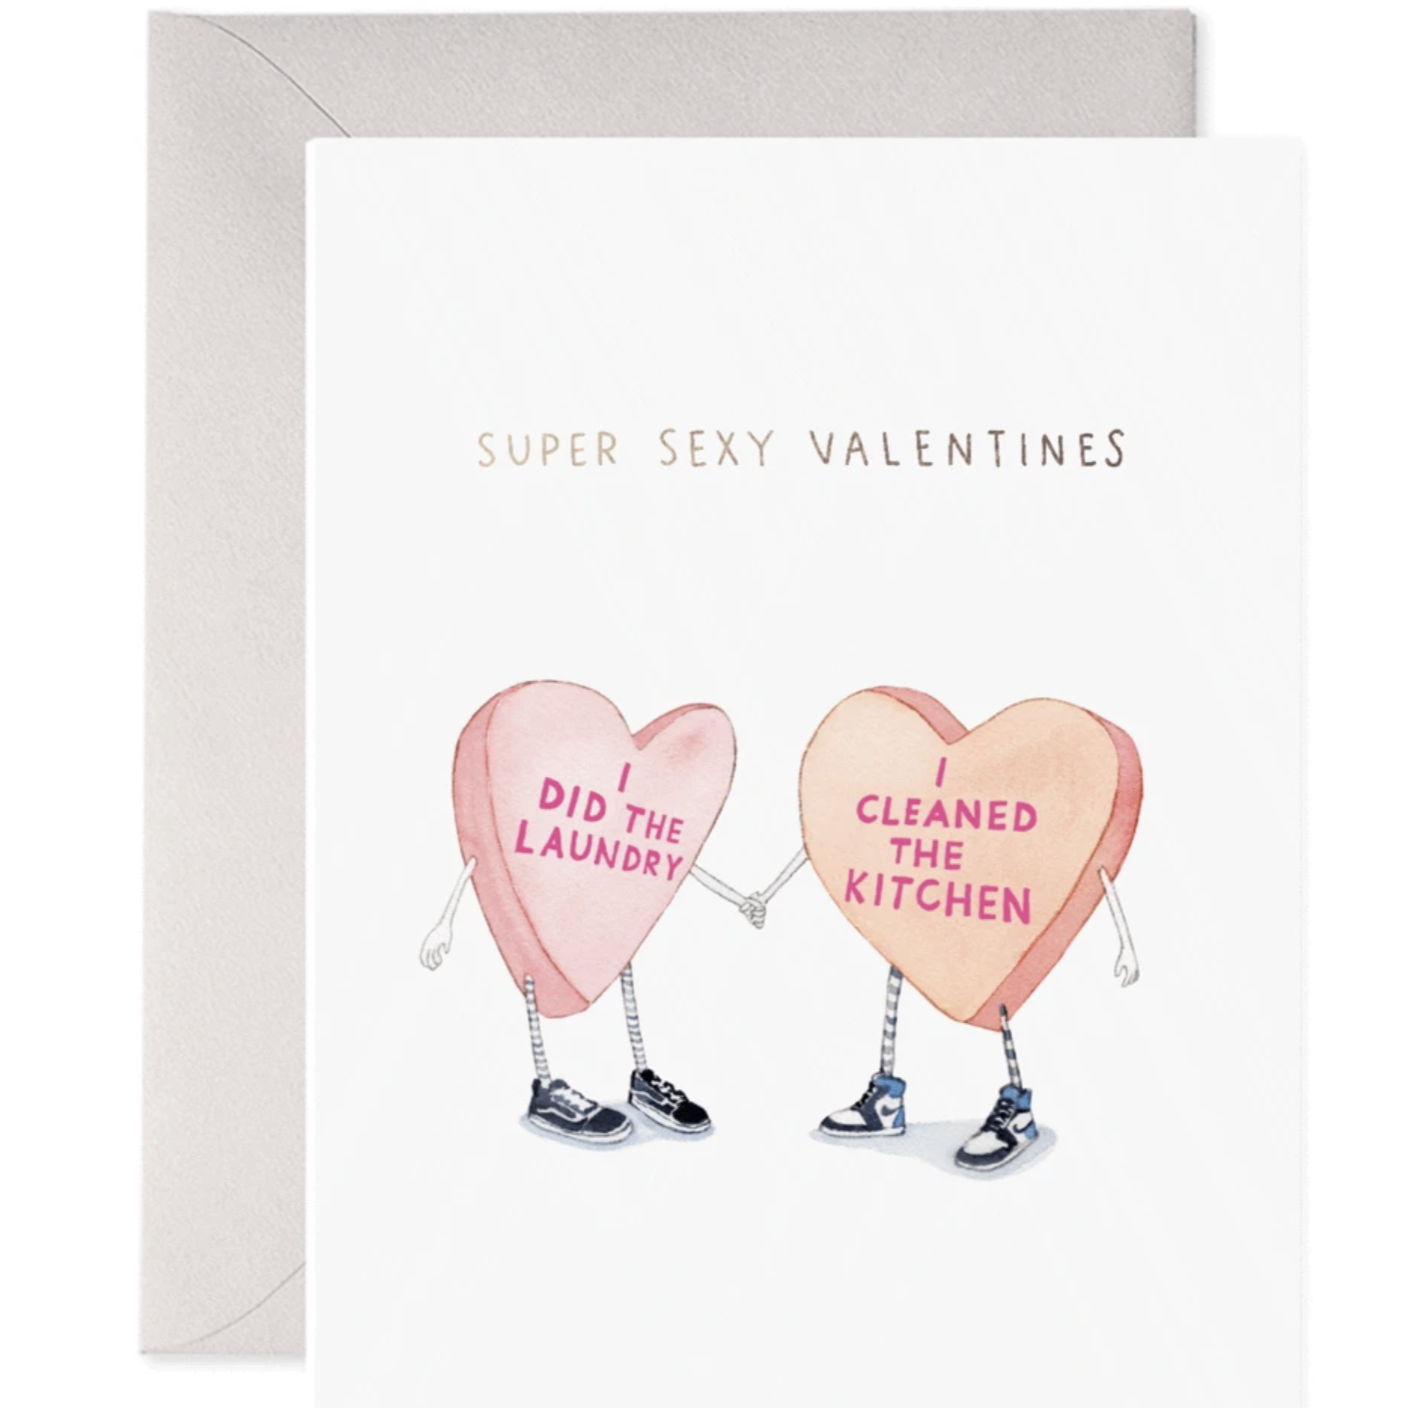 Sexy Valentine Card